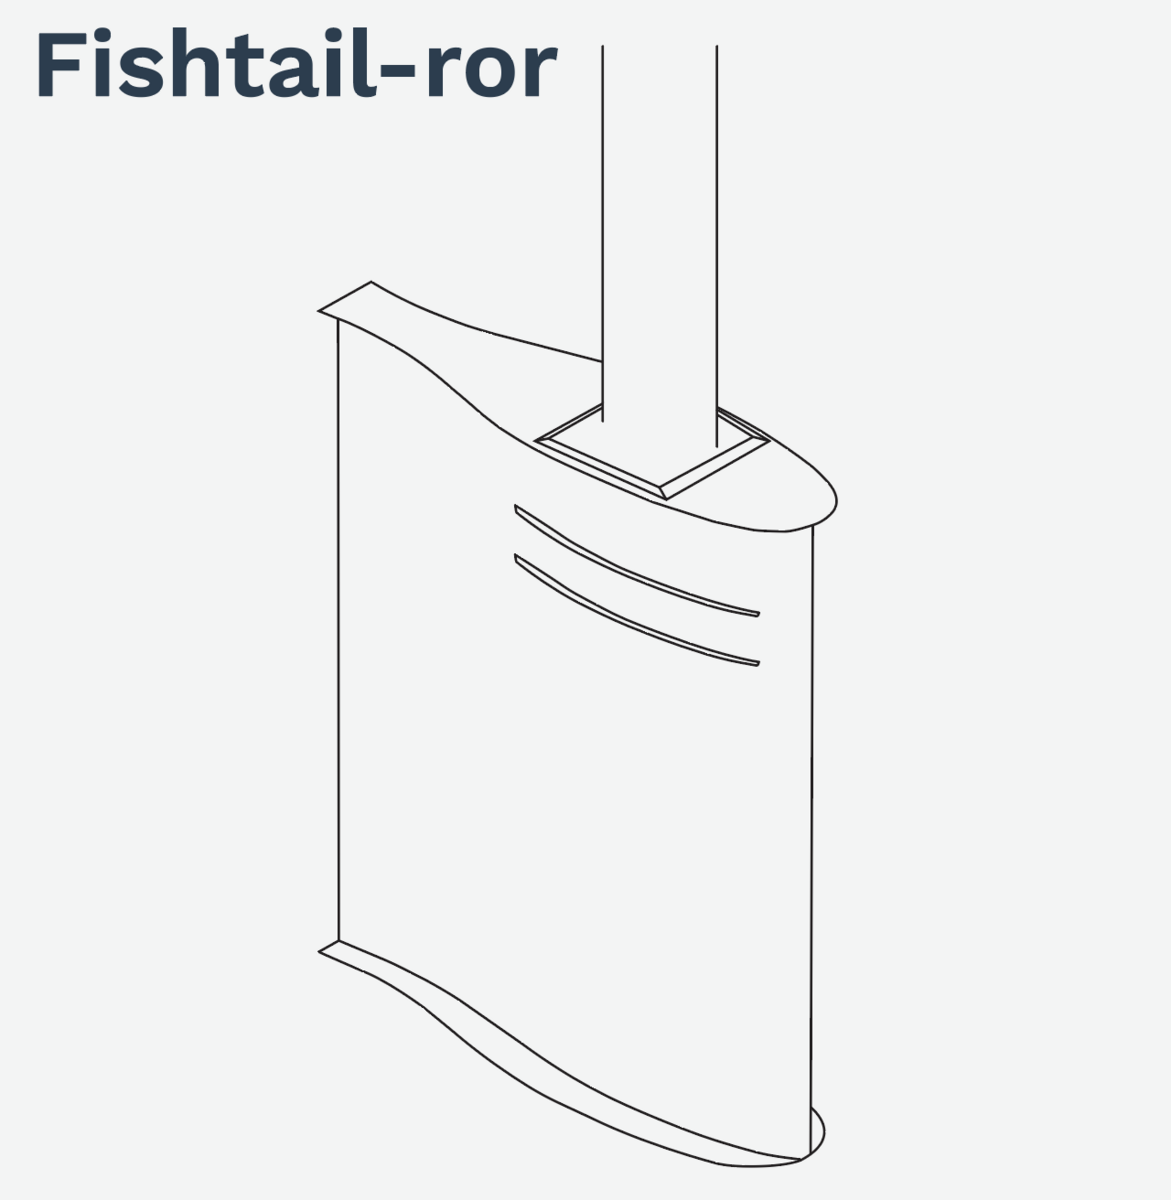 Fishtail-ror